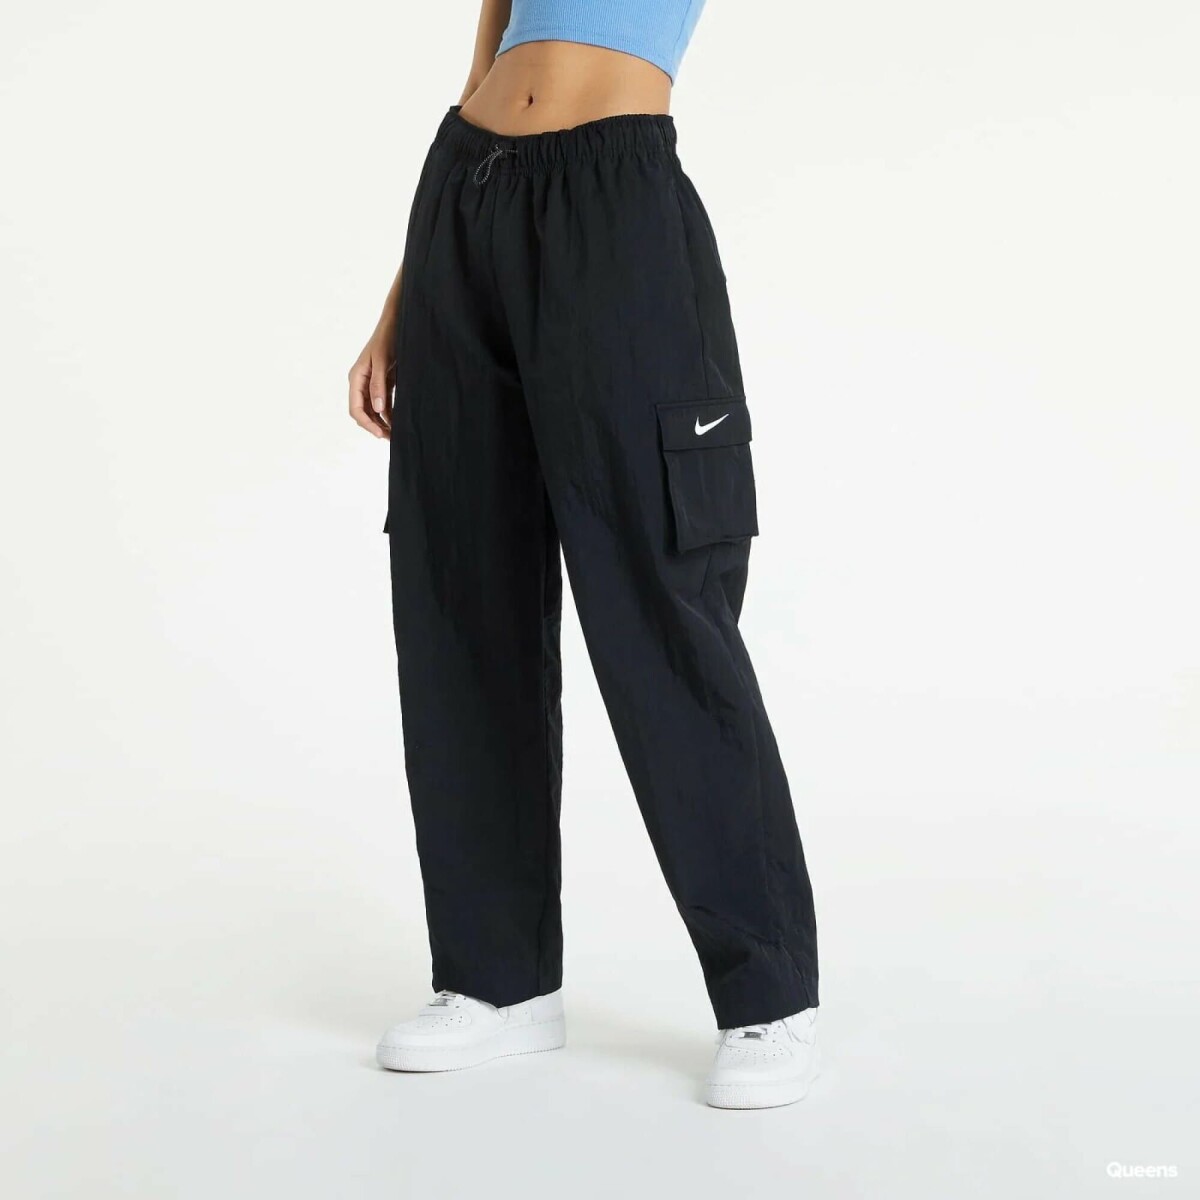 Pantalon Nike Moda Dama Essntl Wvn Hr Cargo Black/(White) - S/C 